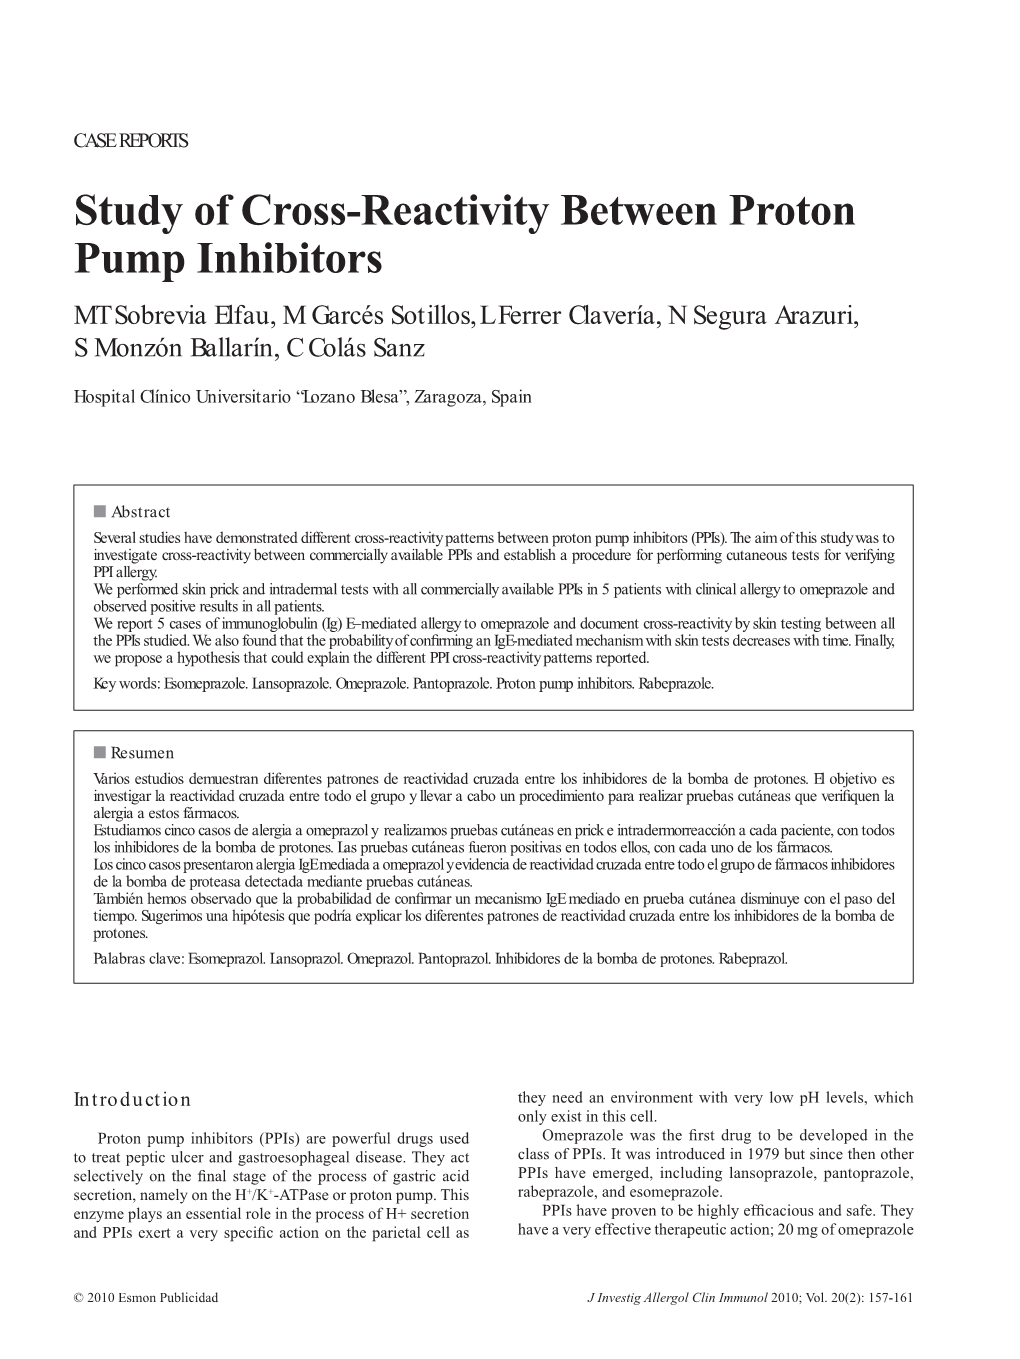 Study of Cross-Reactivity Between Proton Pump Inhibitors MT Sobrevia Elfau, M Garcés Sotillos, L Ferrer Clavería, N Segura Arazuri, S Monzón Ballarín, C Colás Sanz